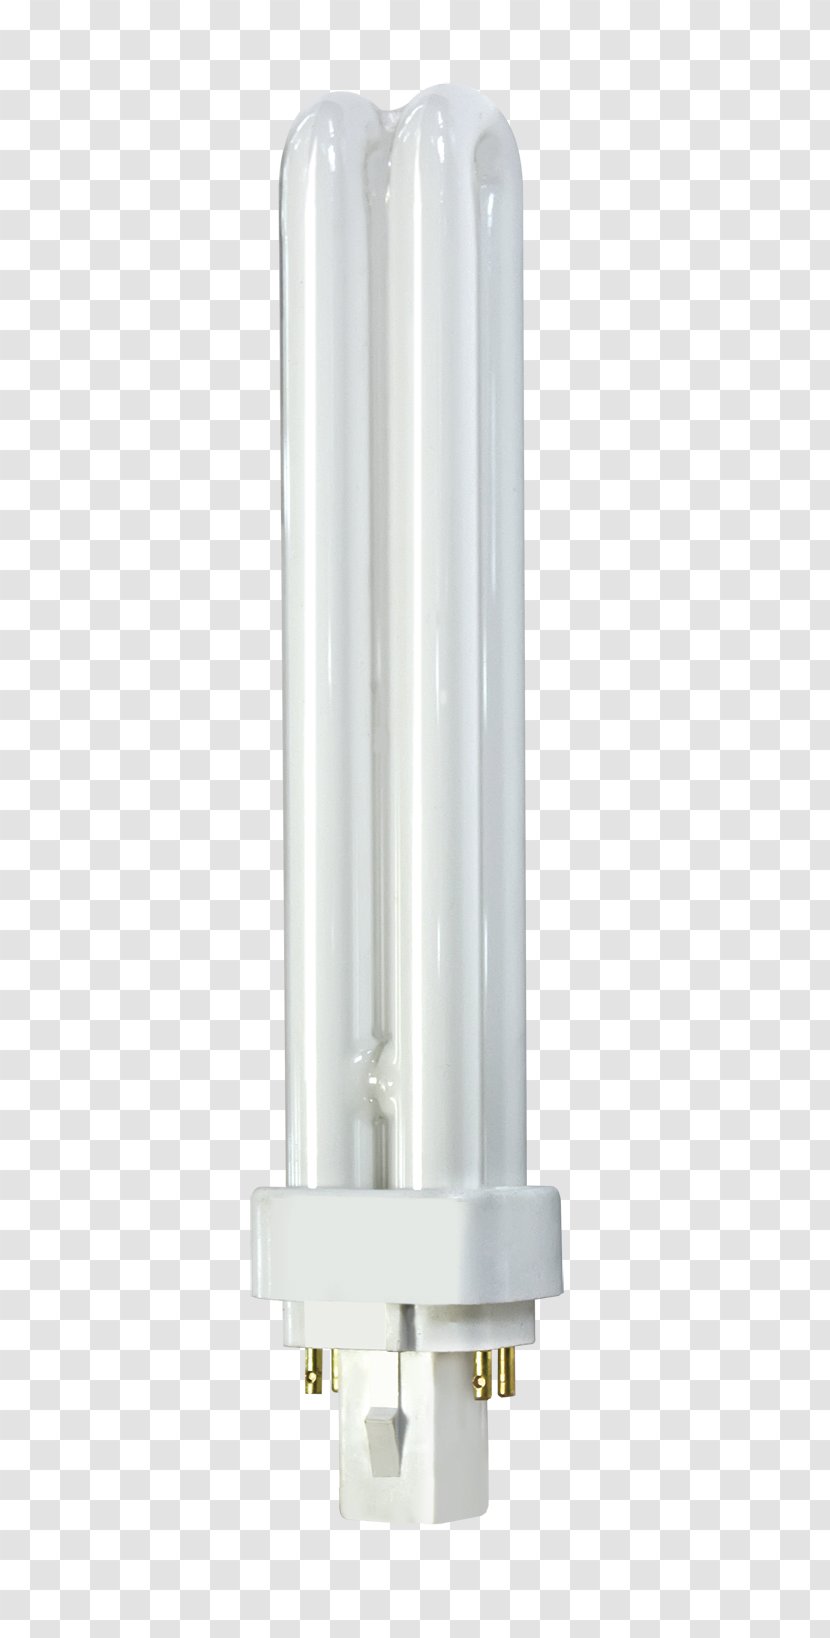 Compact Fluorescent Lamp Lighting Edison Screw Electrical Ballast - Garland - Girlanda Transparent PNG